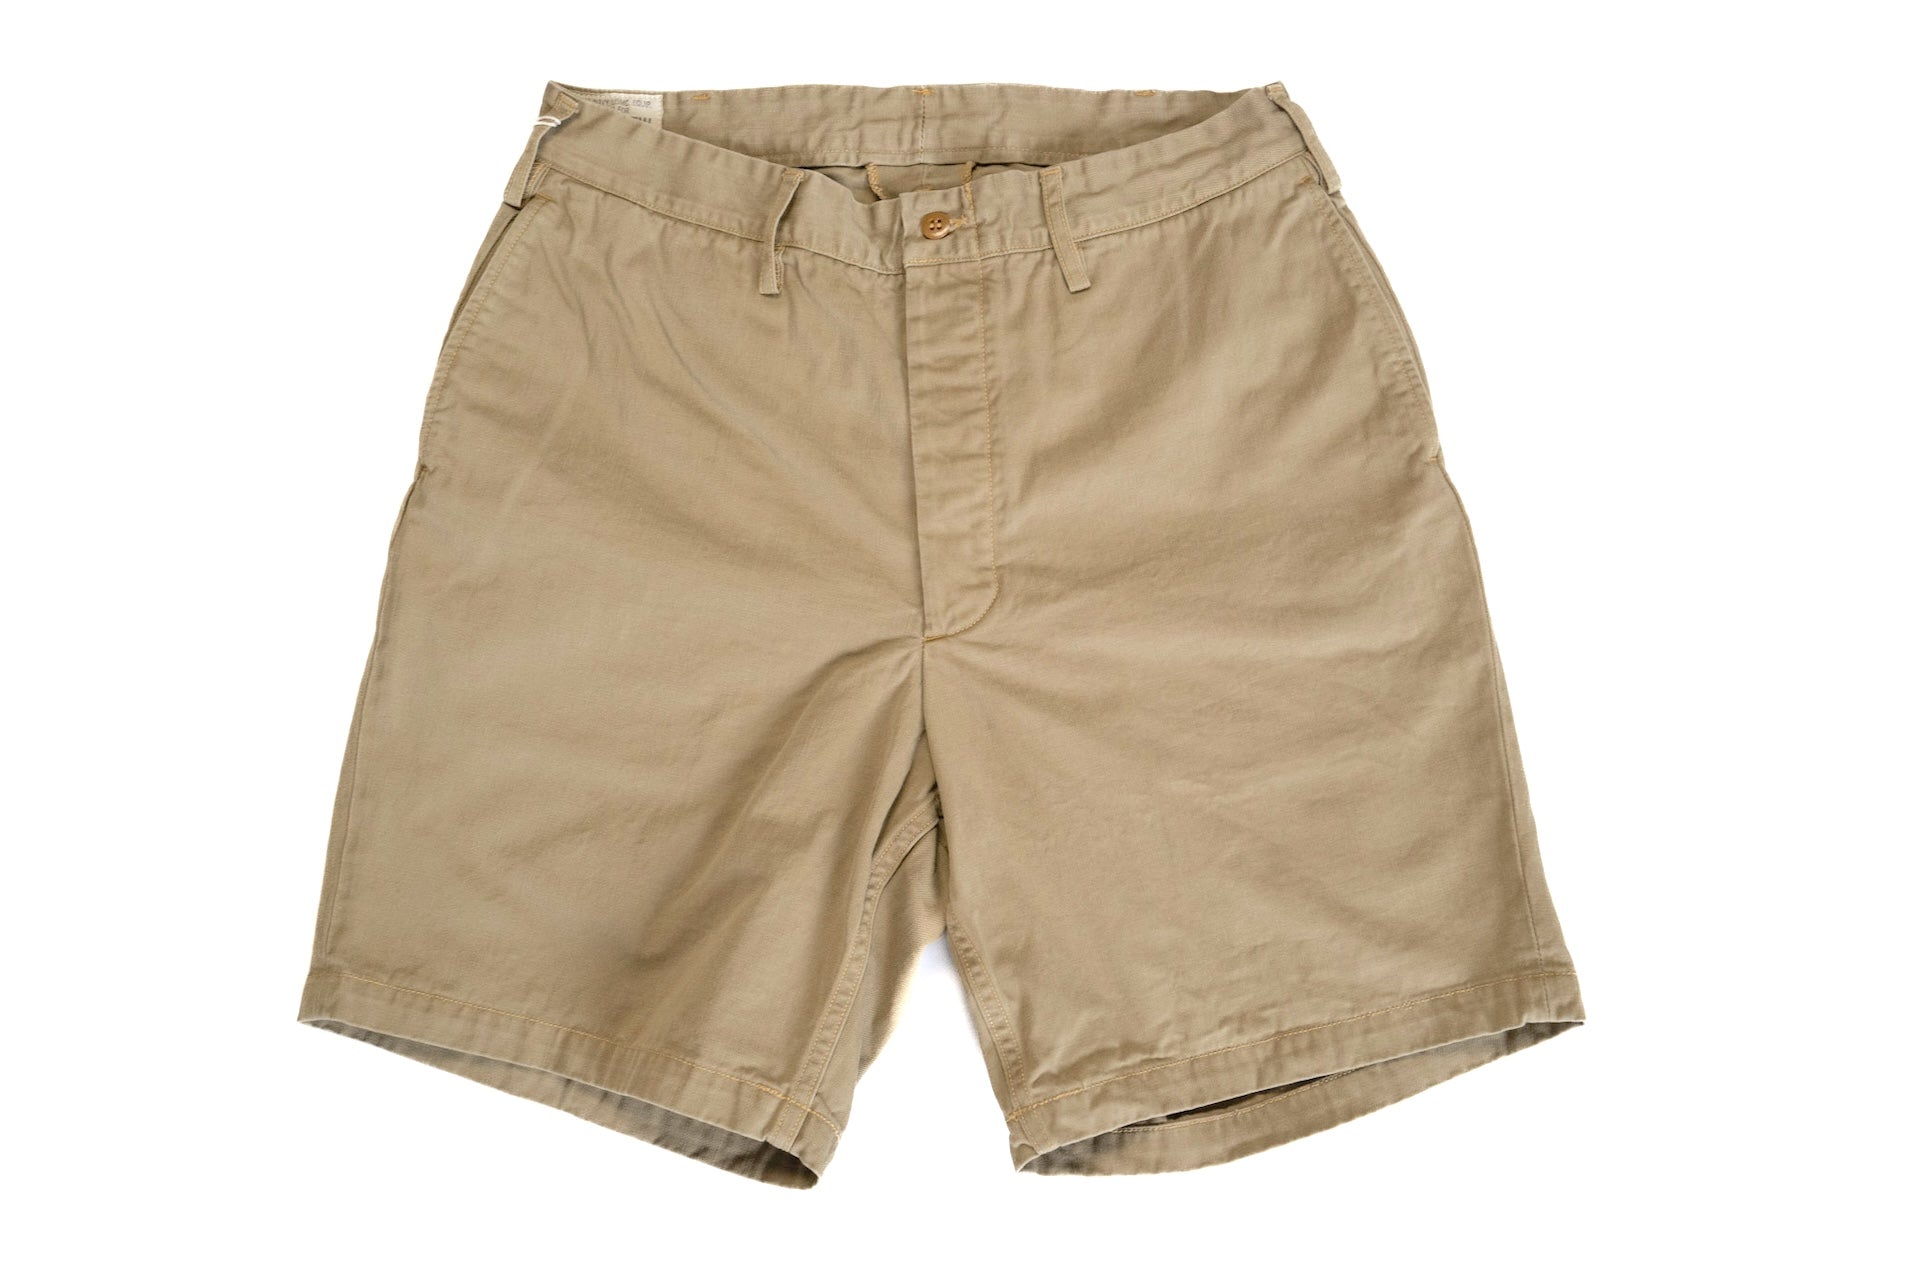 Freewheelers 12oz Cotton Twill "Military Tropical Shorts" (Khaki Beige)